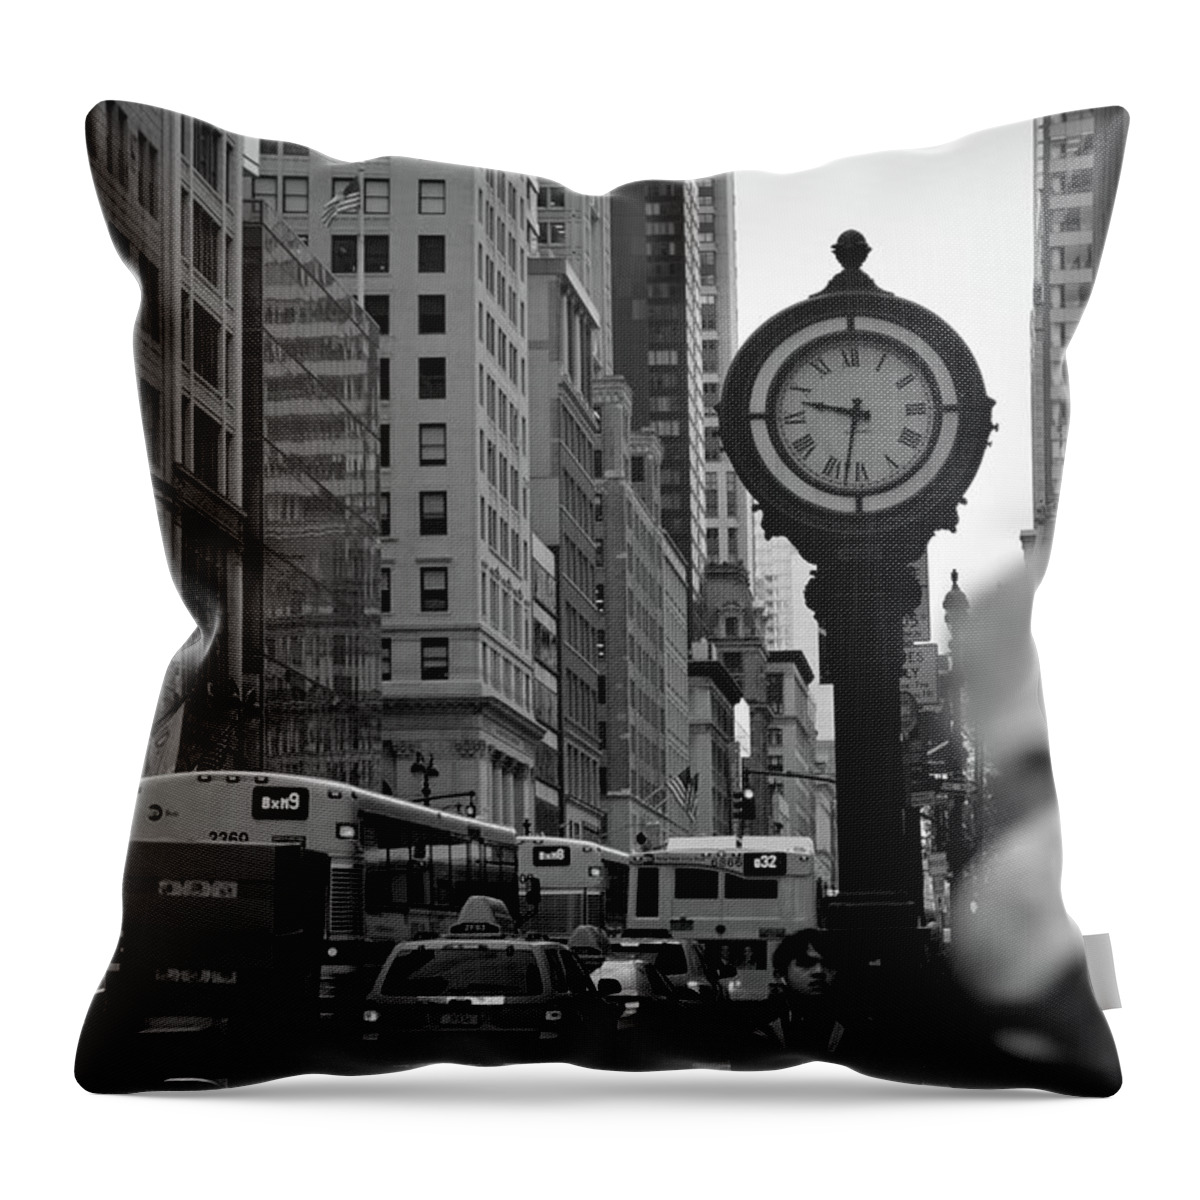 New York Throw Pillow featuring the photograph Midtown by Lucas Valente da Costa